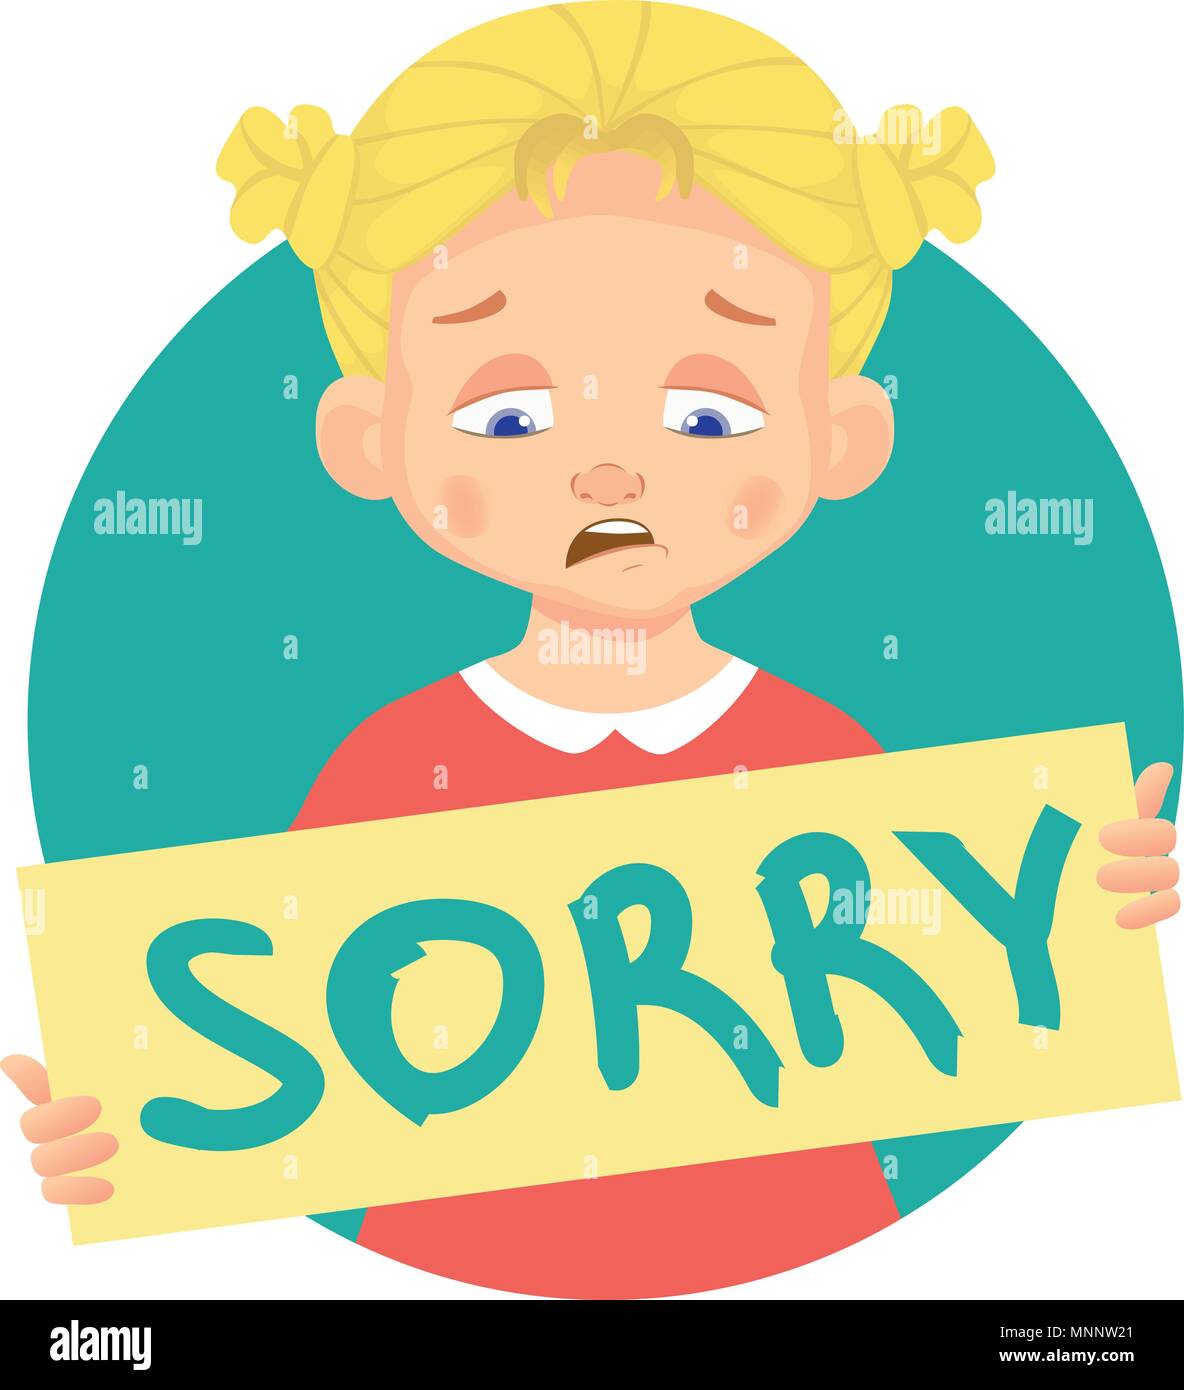 Sad Girl holding Sorry poster Stock Vector Image & Art - Alamy